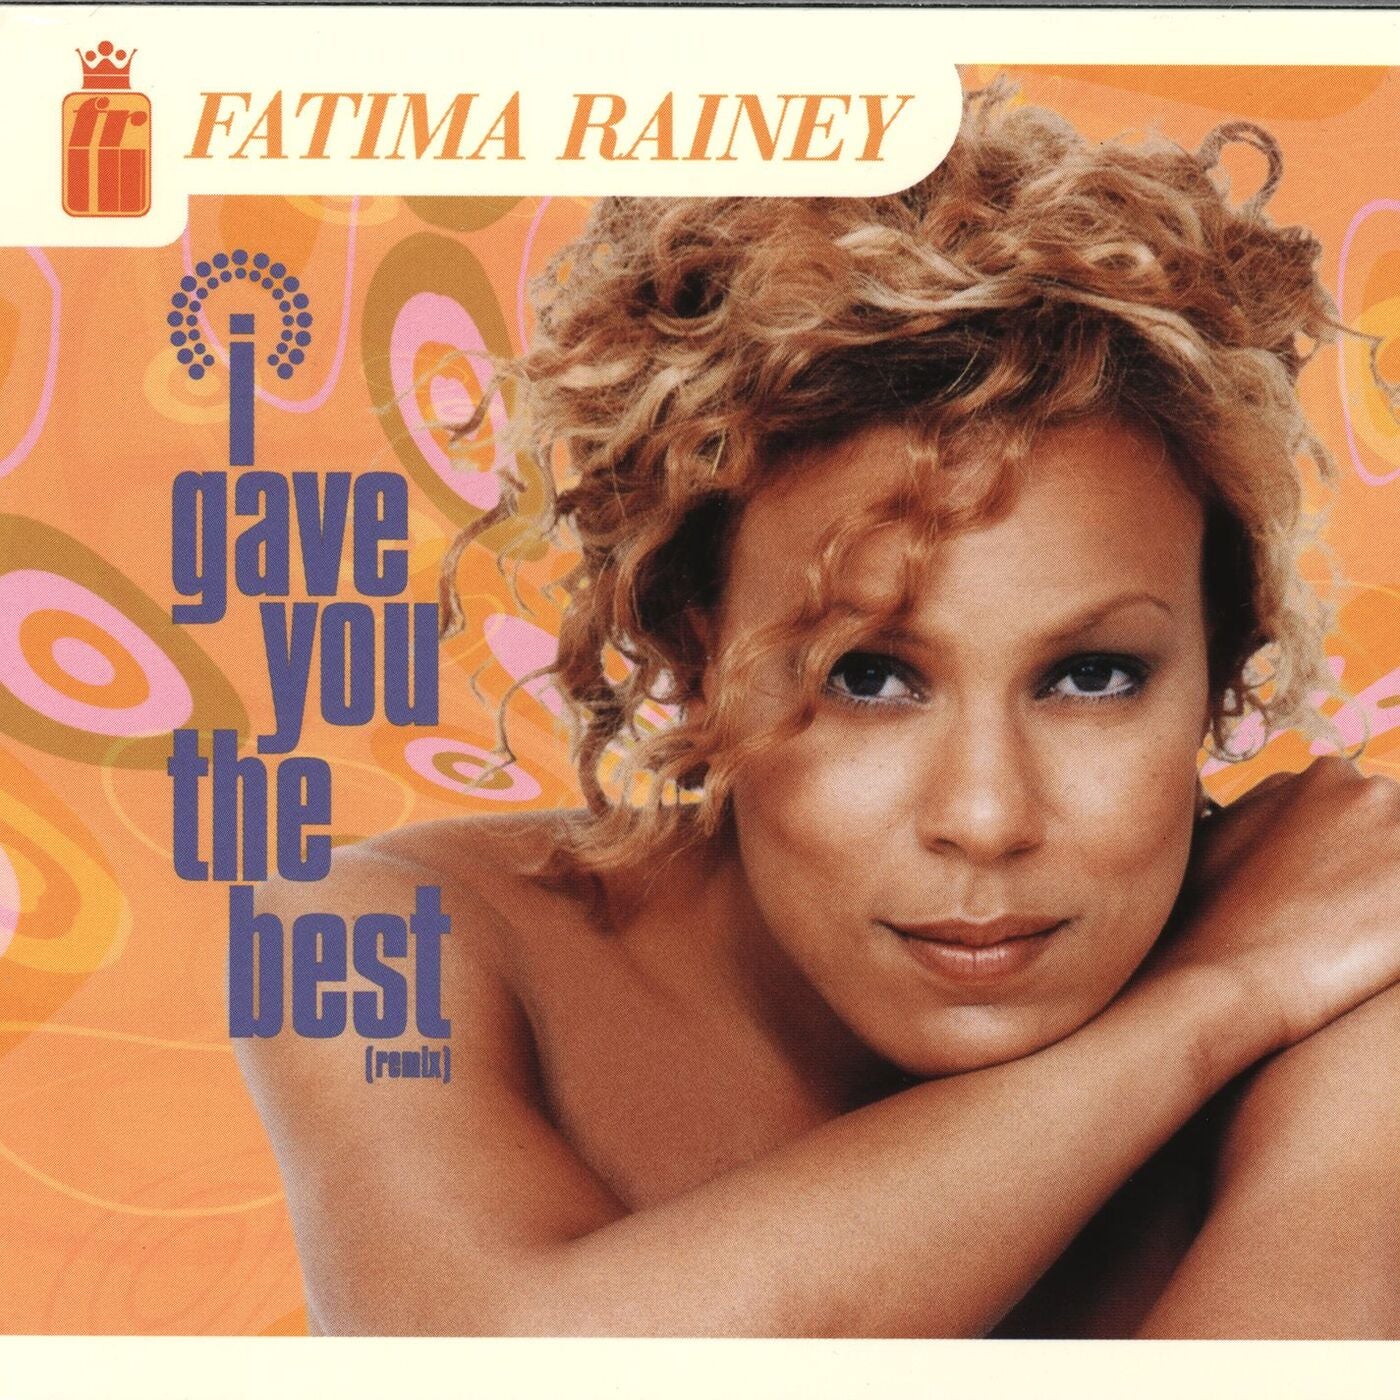 I Gave You The Best by Fatima Rainey on Beatsource